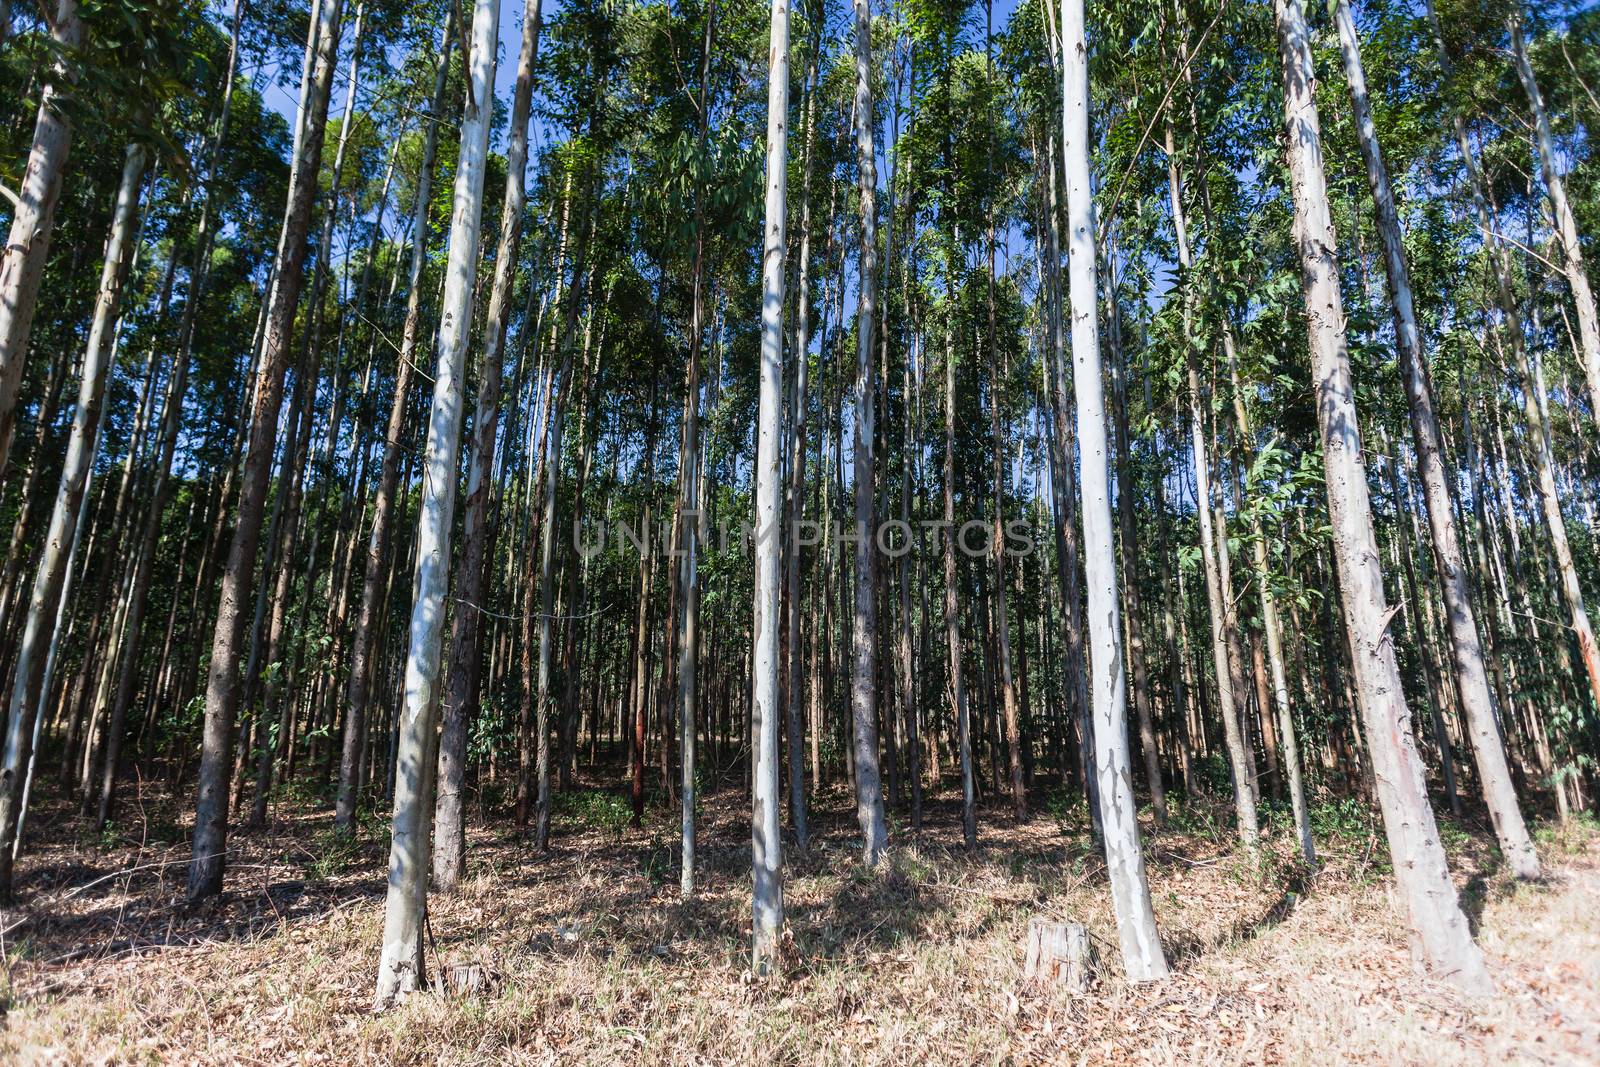 Gum Trees Barks Forests by ChrisVanLennepPhoto